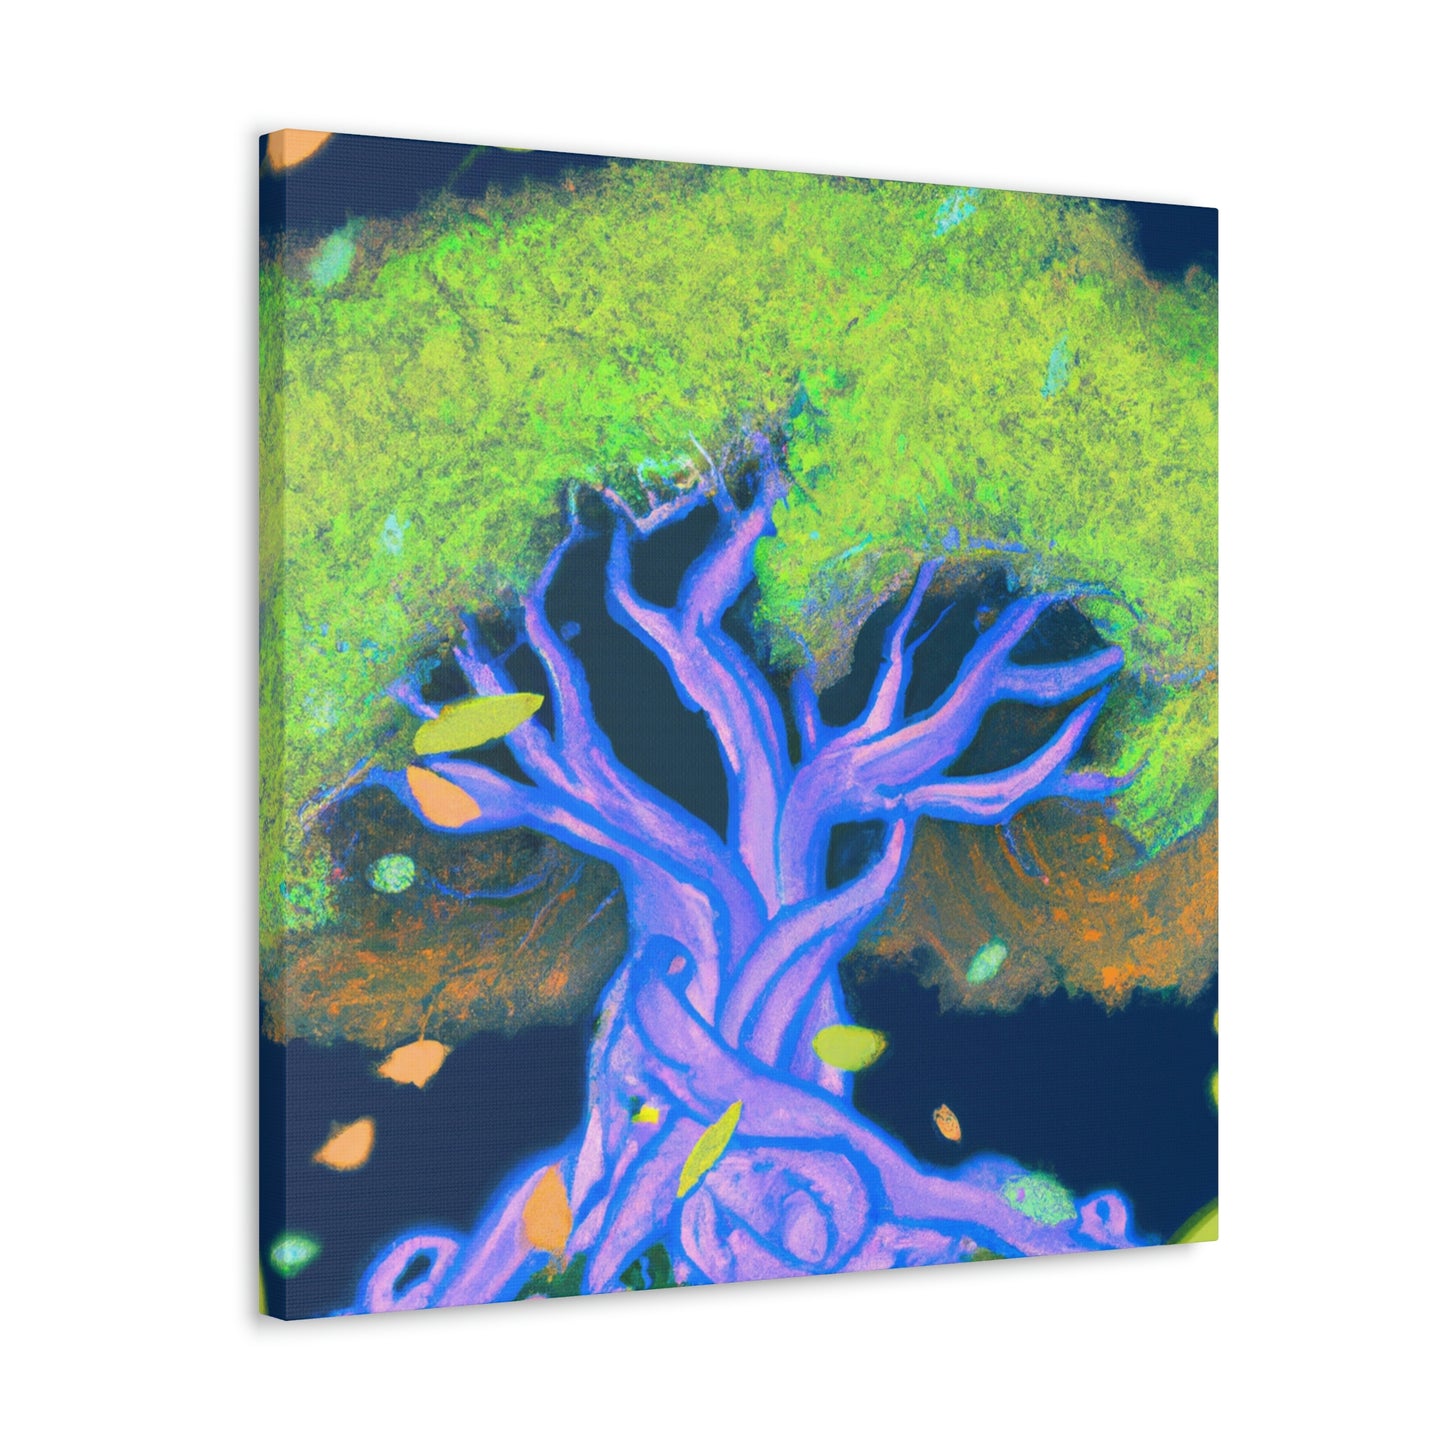 "The Enchanted Tree" - The Alien Canva